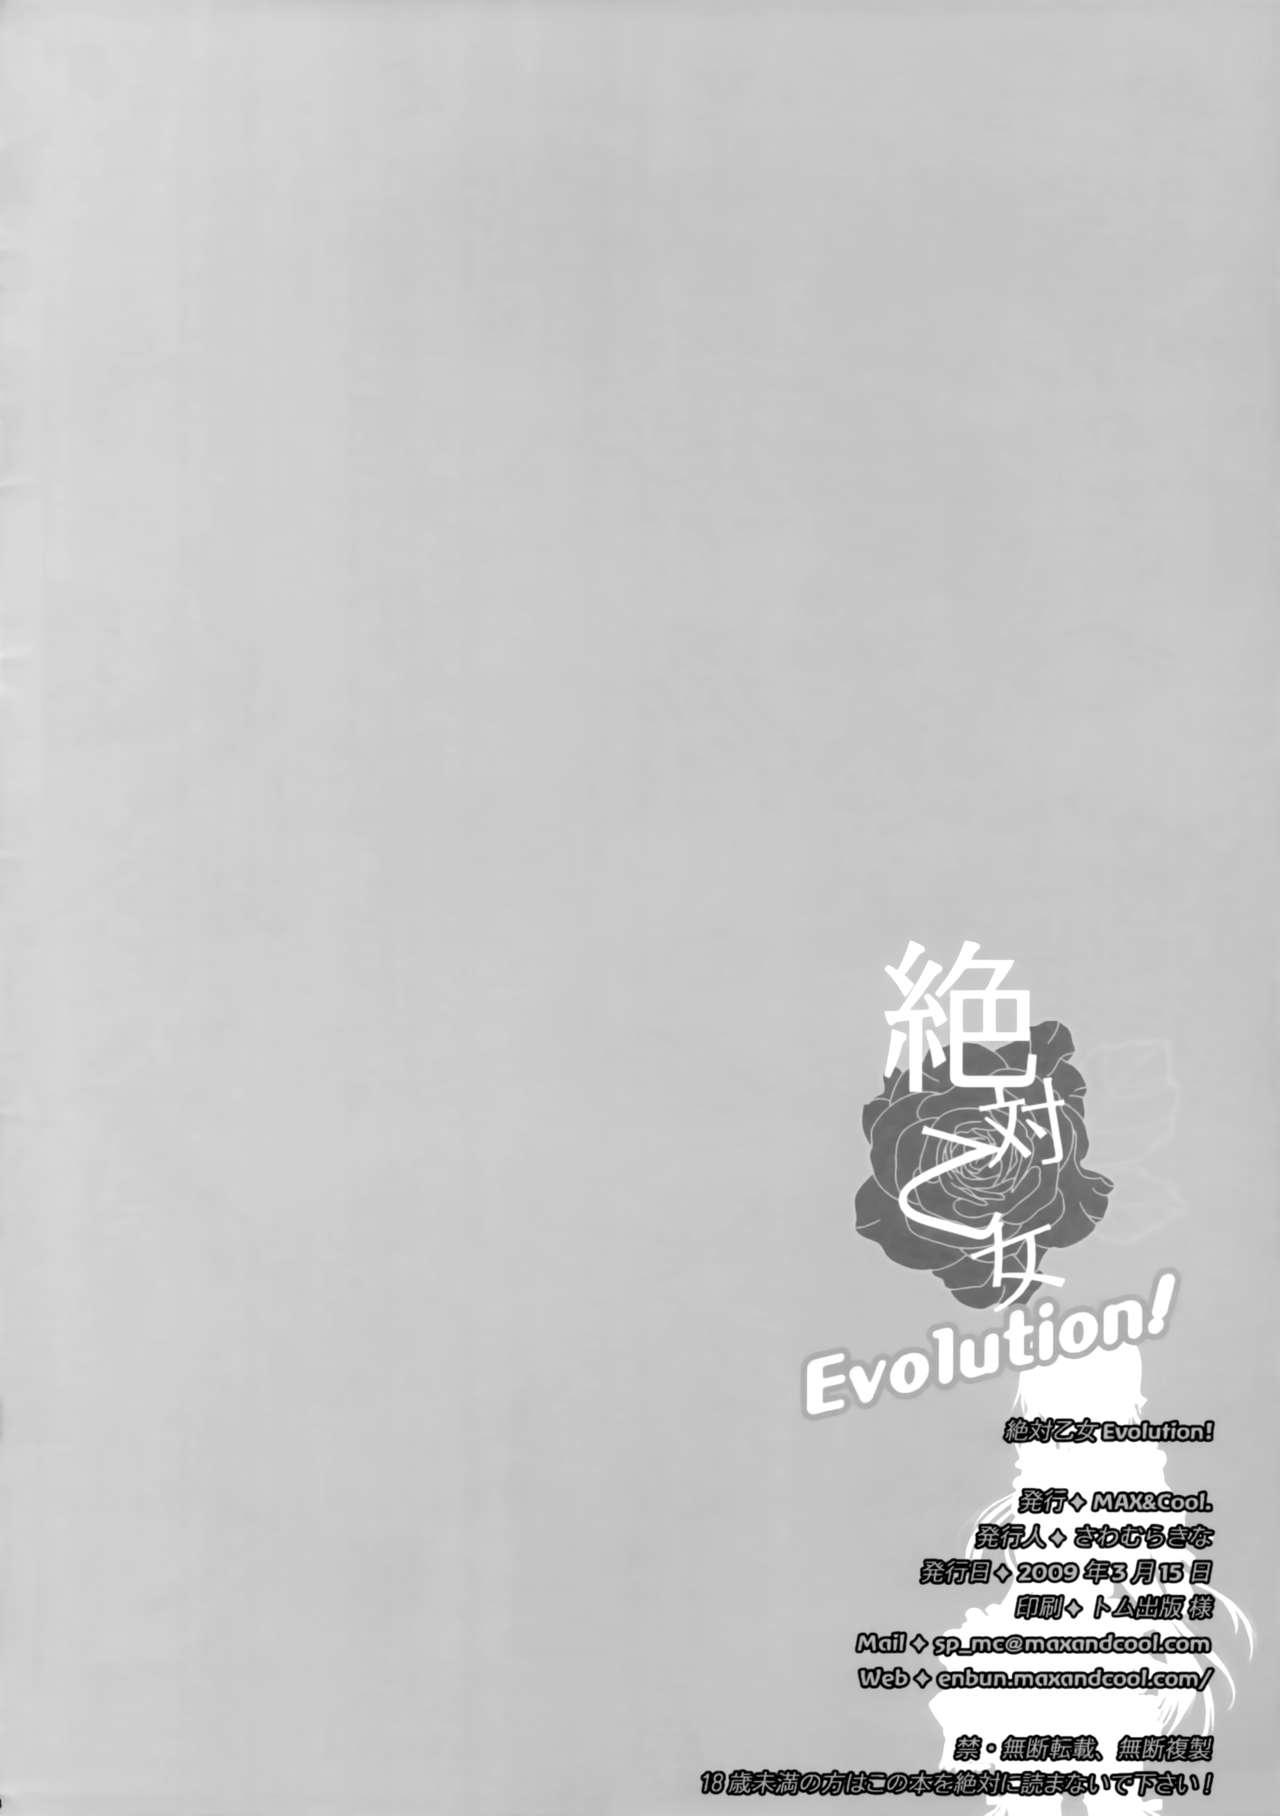 Hand Zettai Otome Evolution! - Code geass Chudai - Page 3